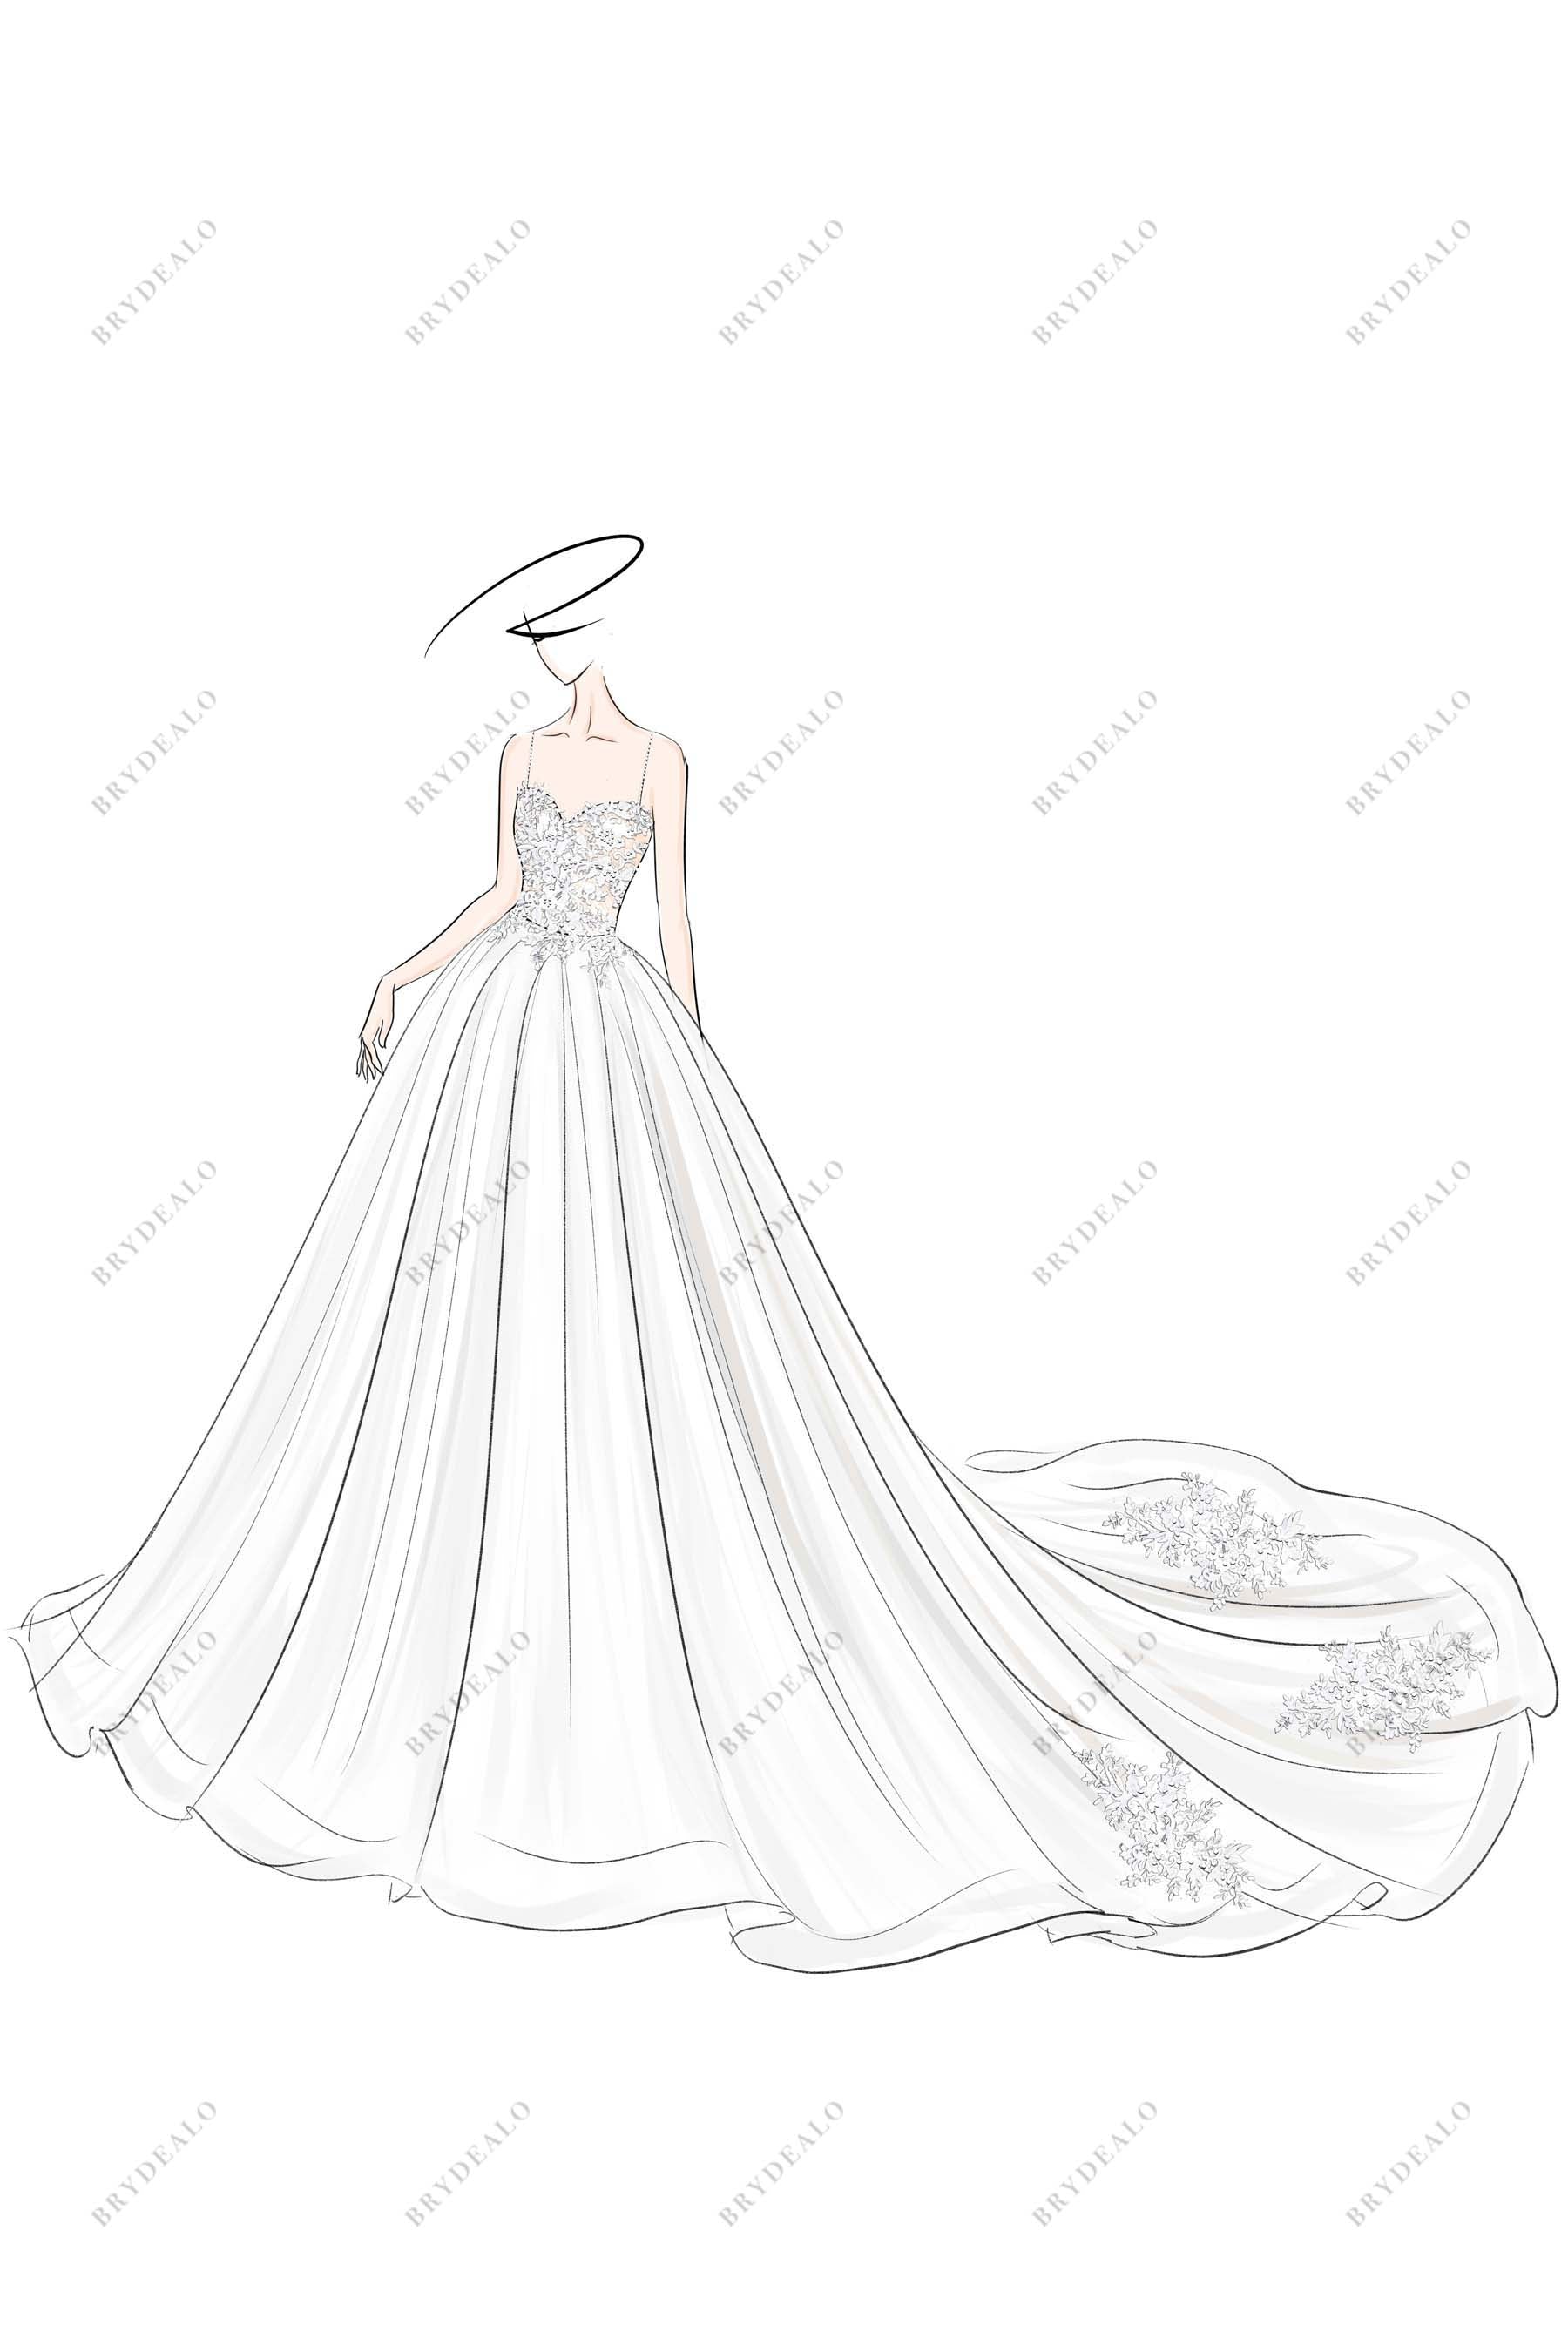 Lace Corset Designer Wedding Ball Gown Sketch